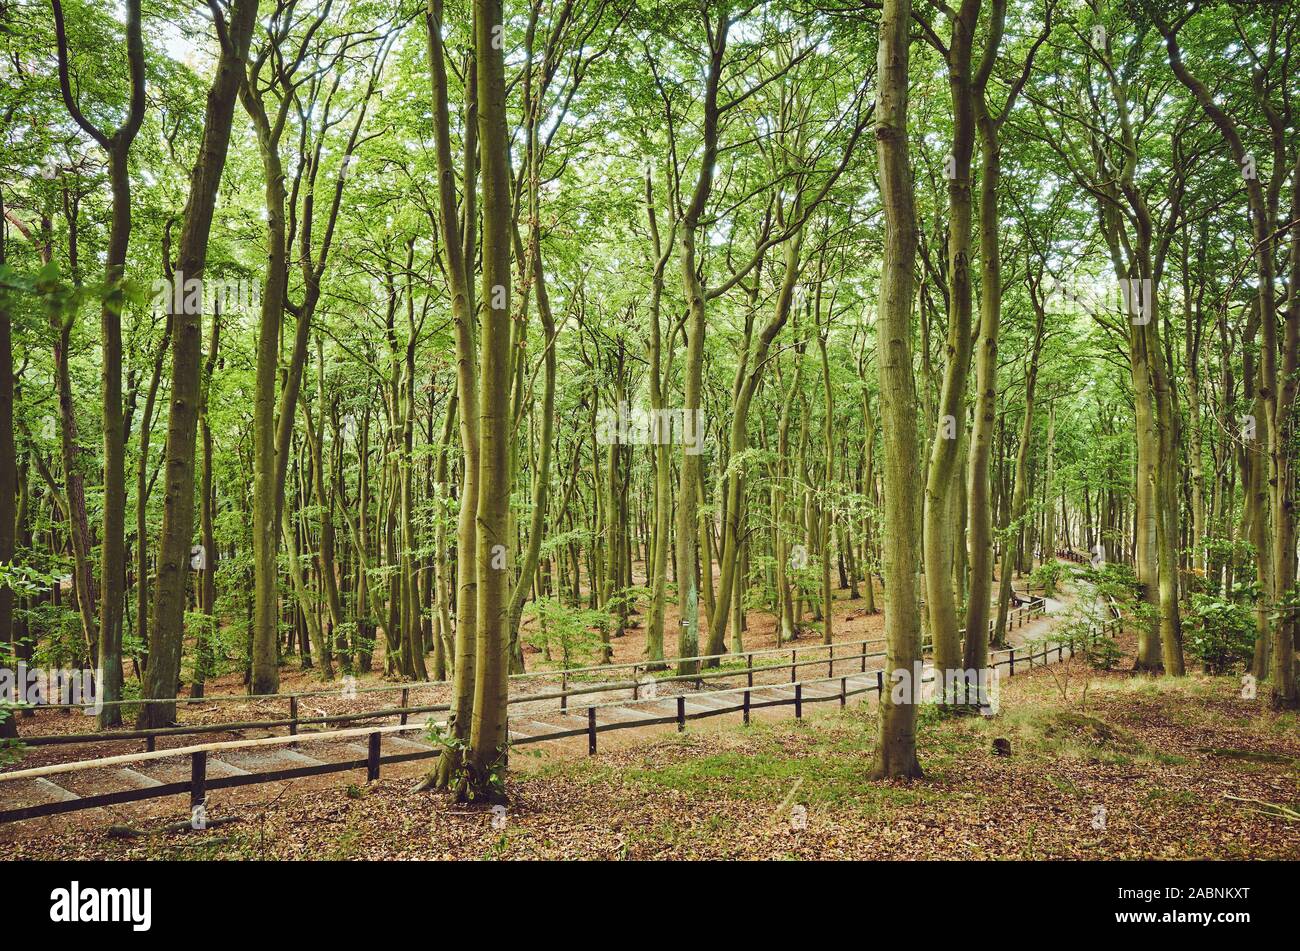 Scenic path in a beech forest, Miedzyzdroje, Poland. Stock Photo